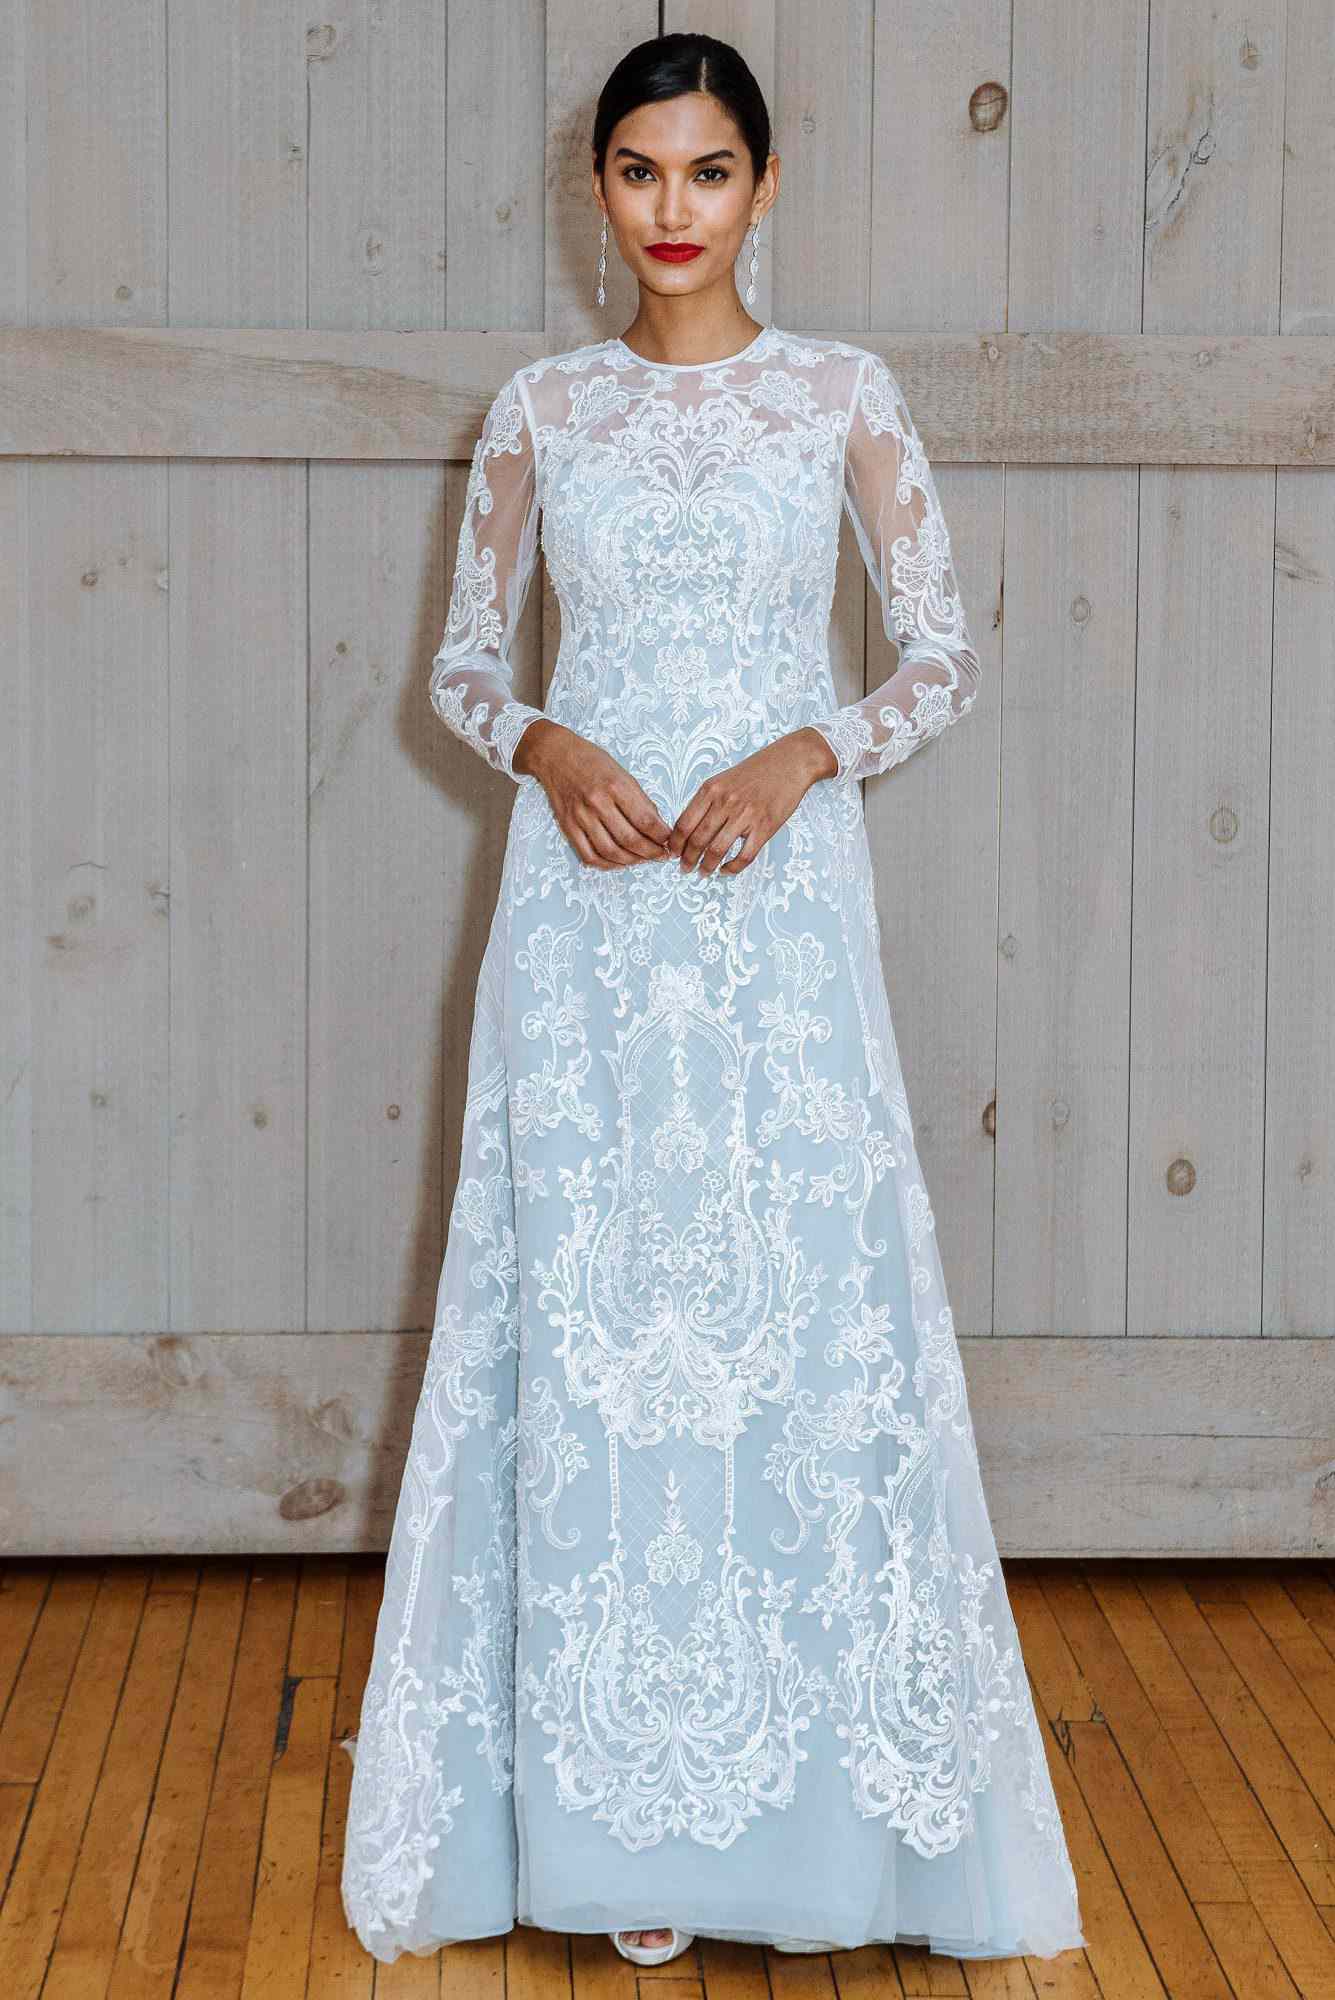 david's bridal long sleeves wedding dress spring 2018